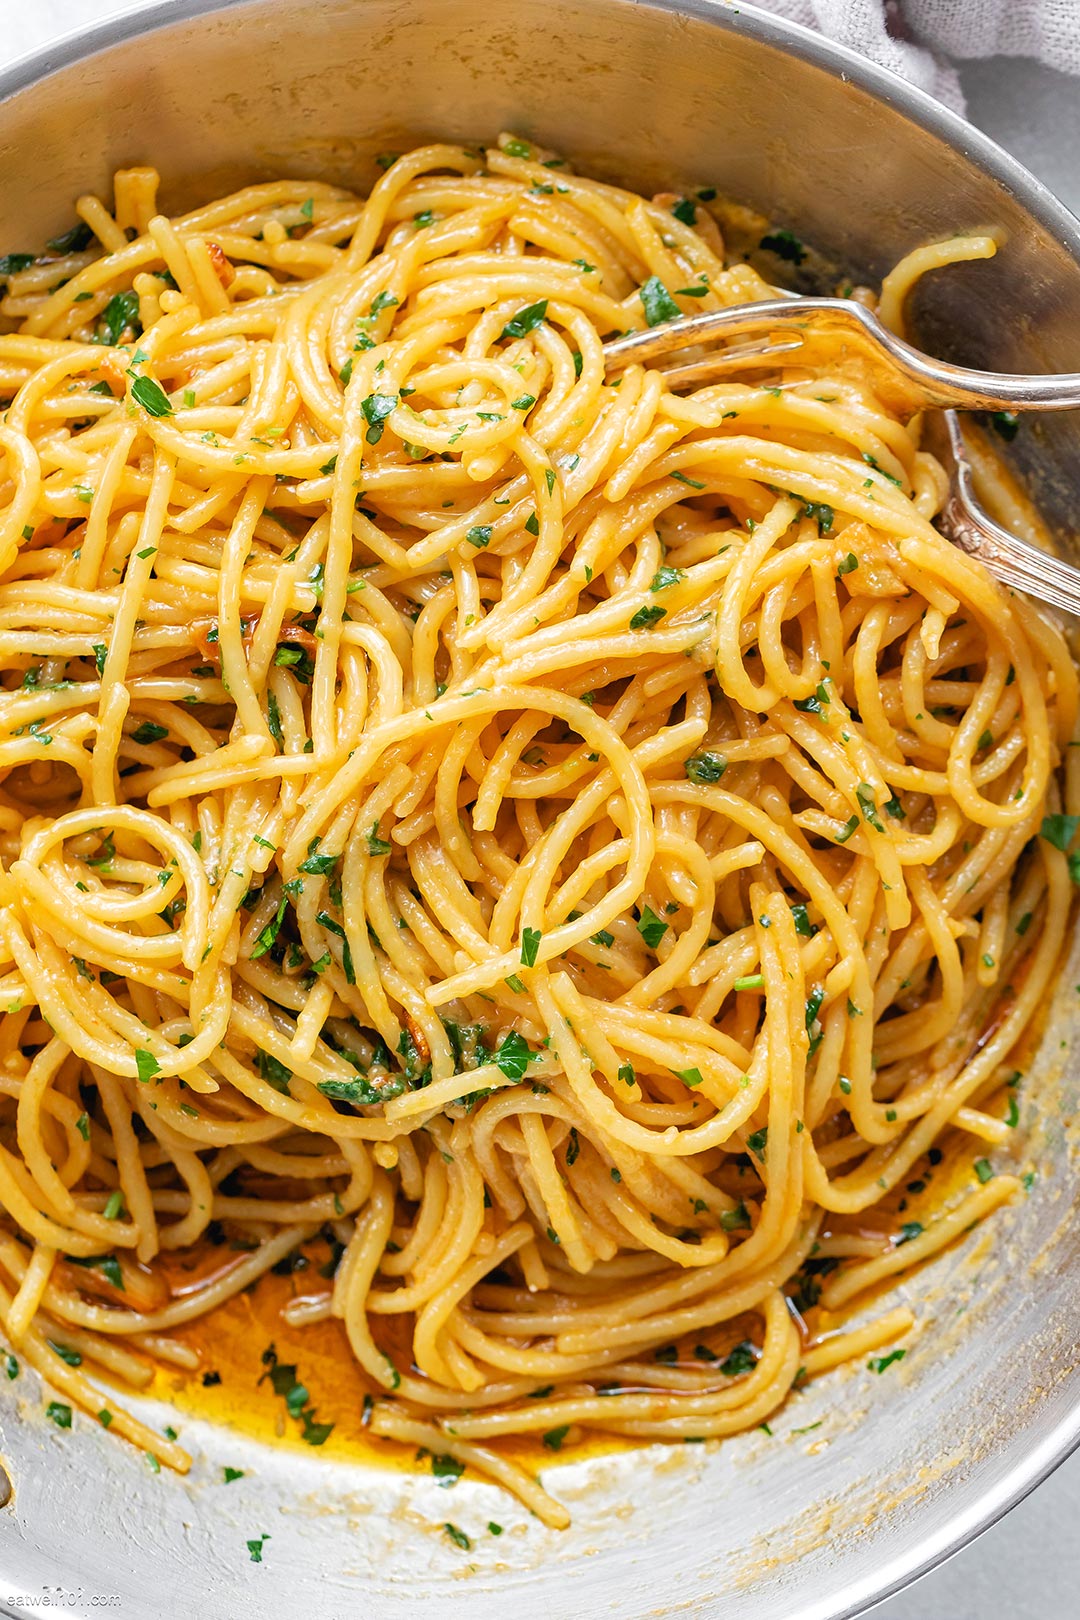 https://www.eatwell101.com/wp-content/uploads/2020/02/Spicy-Garlic-Butter-Pasta-recipe-2.jpg